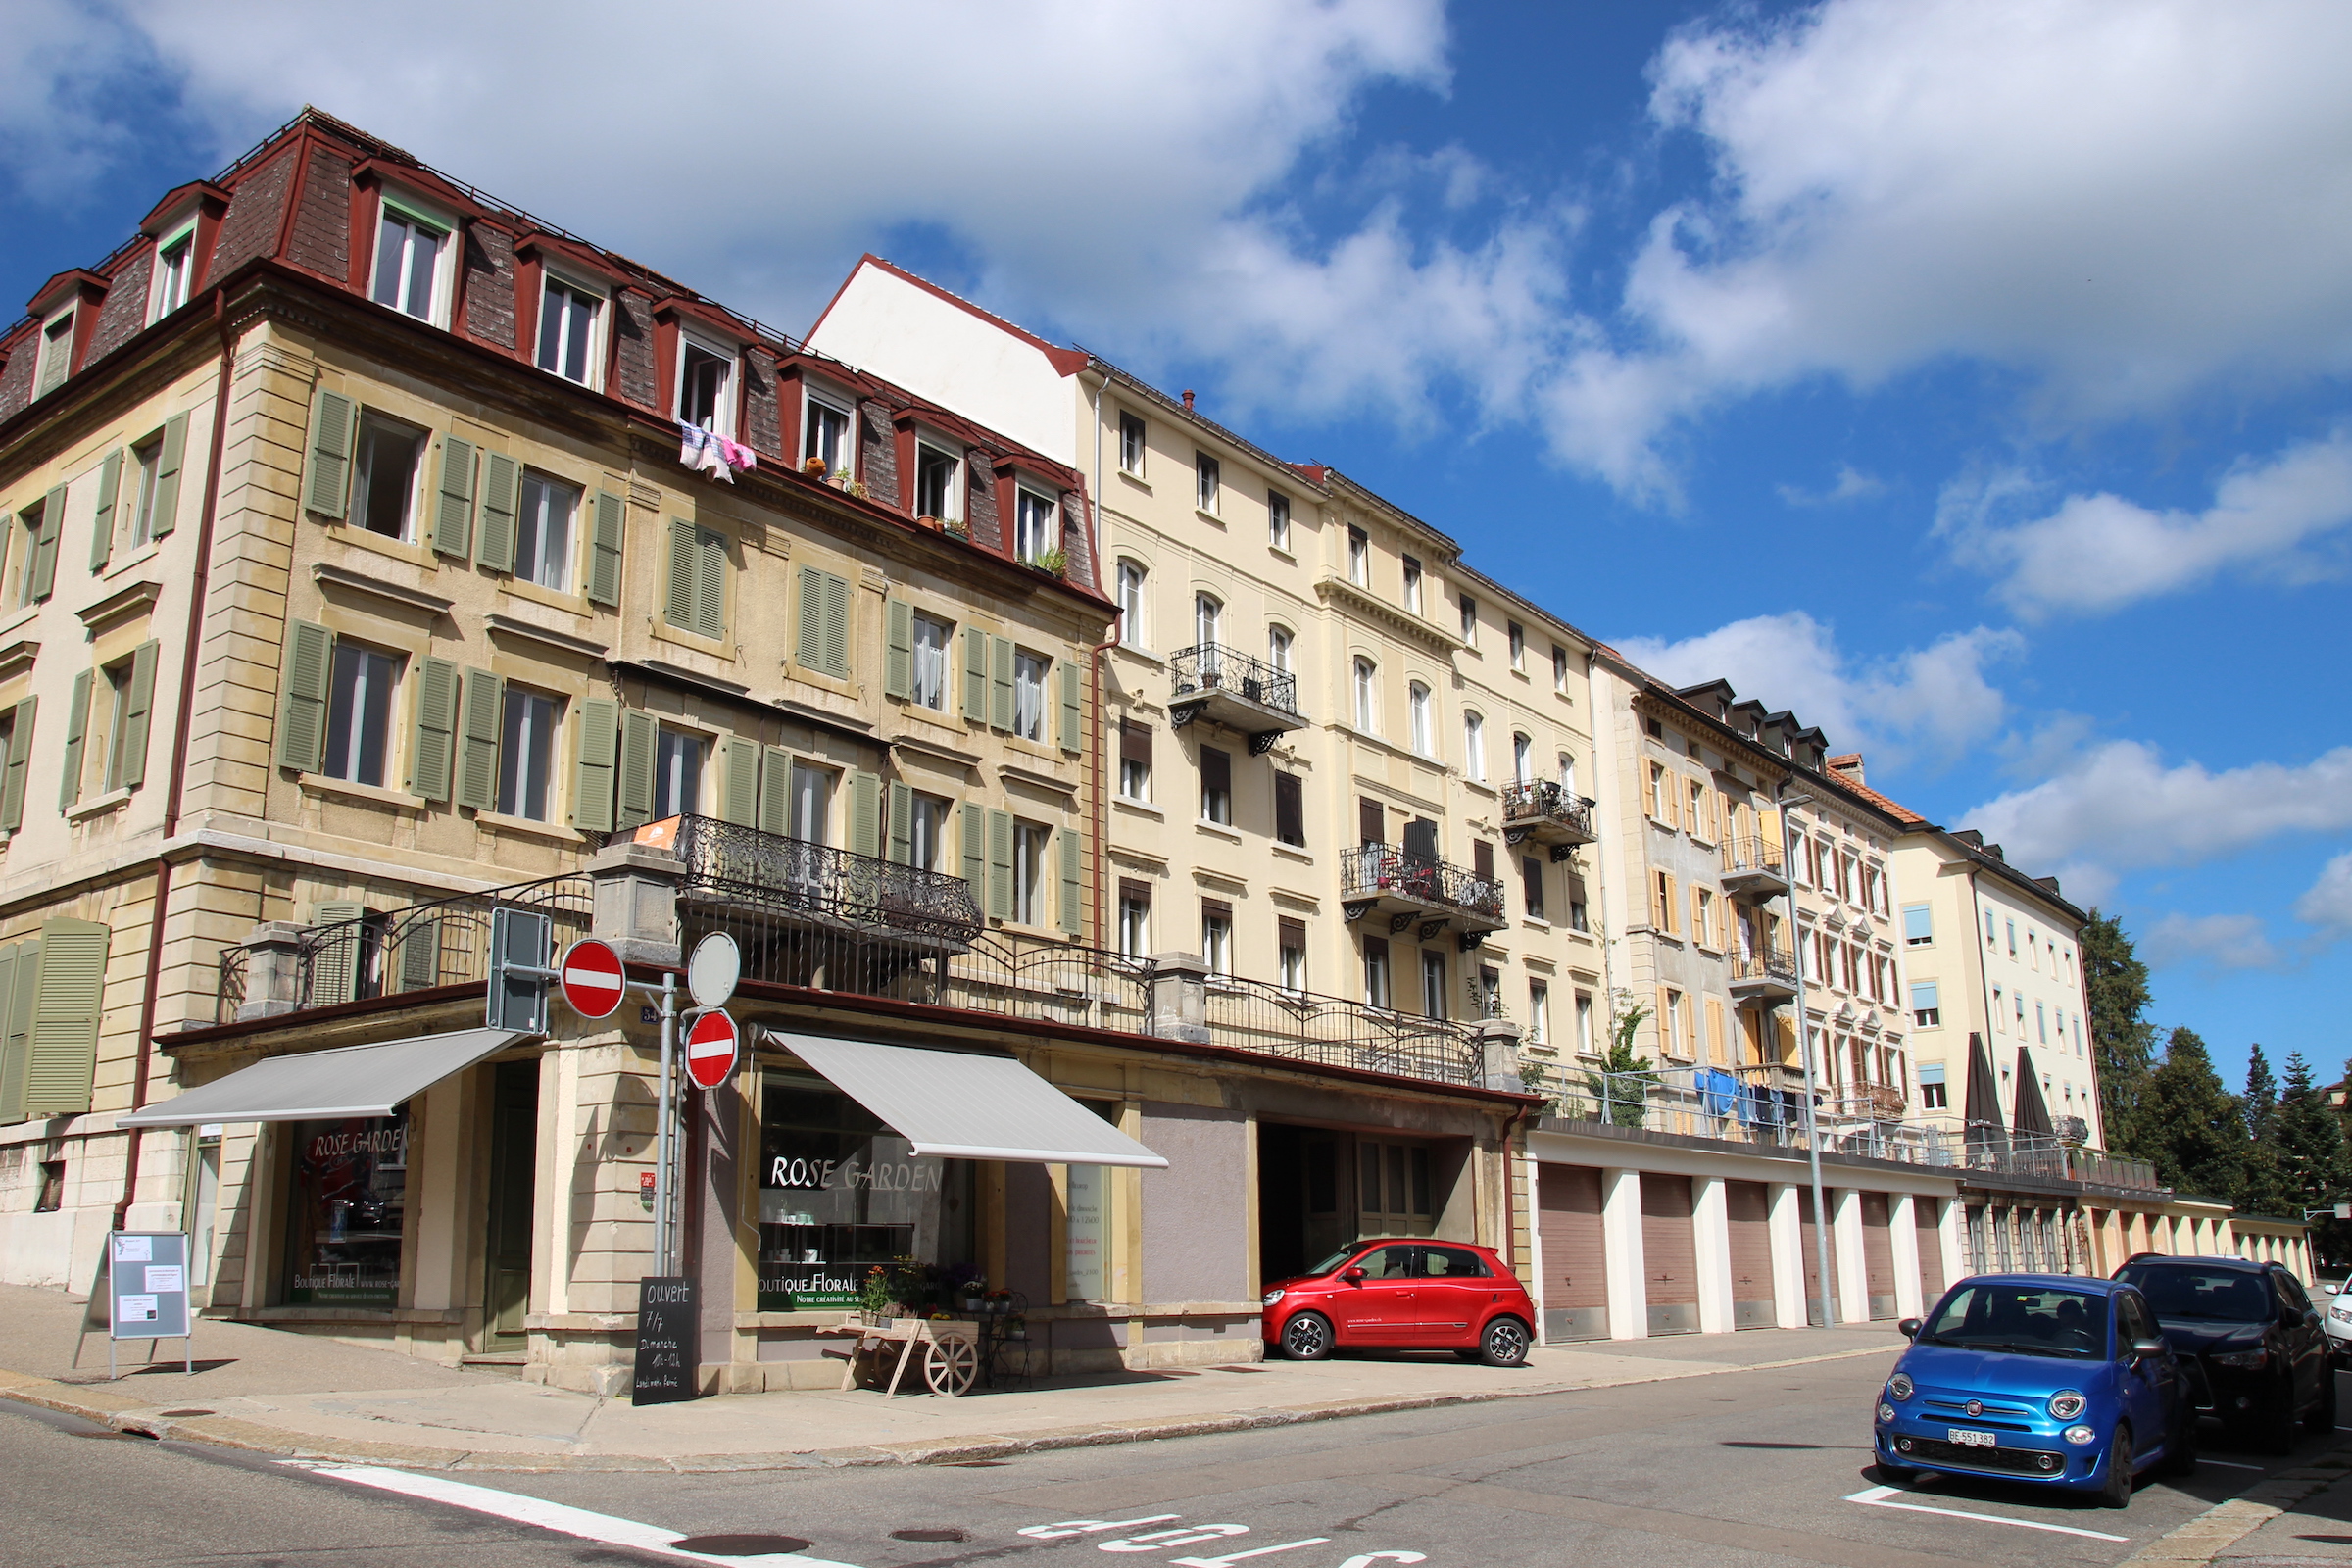 A typical street view in La Chaux-de-Fonds